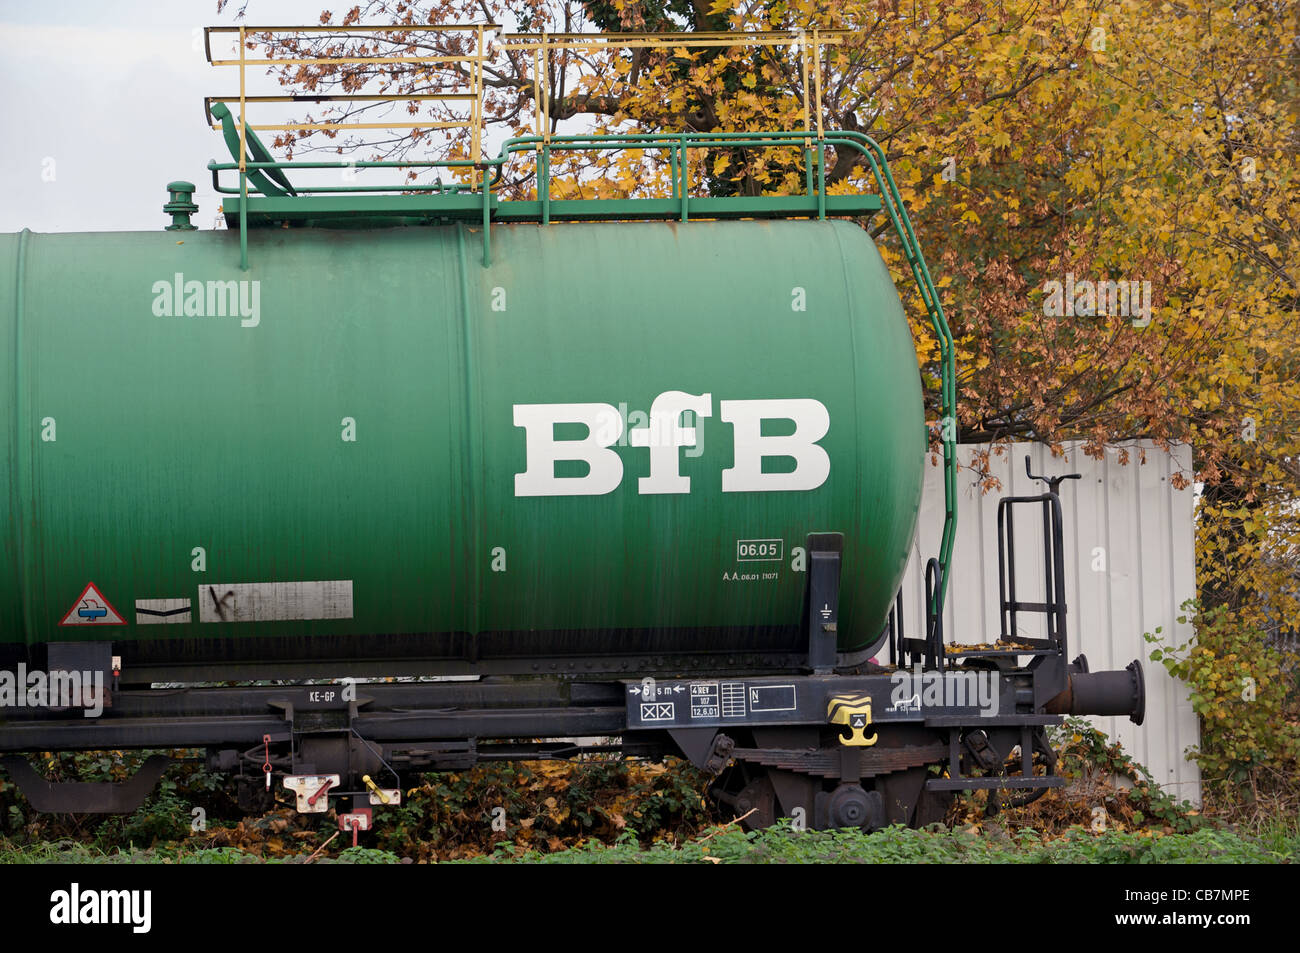 Railway fuel tanker Stock Photo